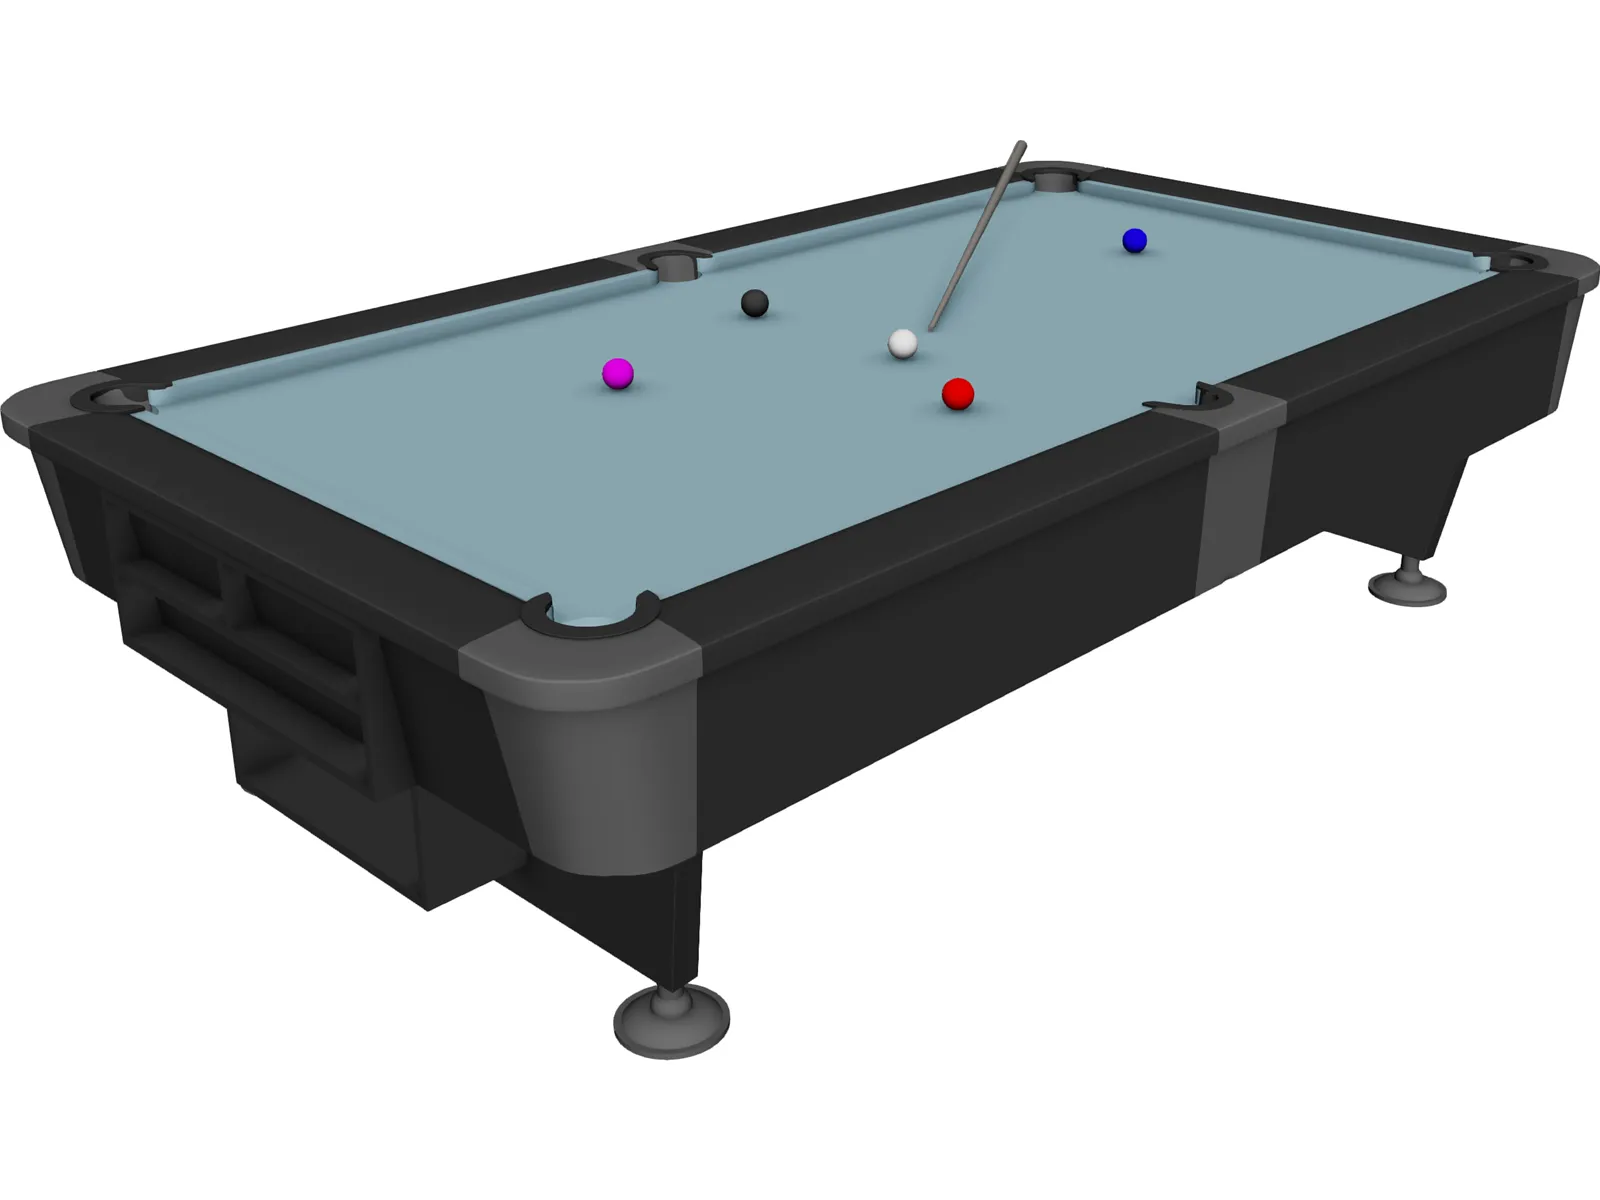 Billiard Table 3D Model